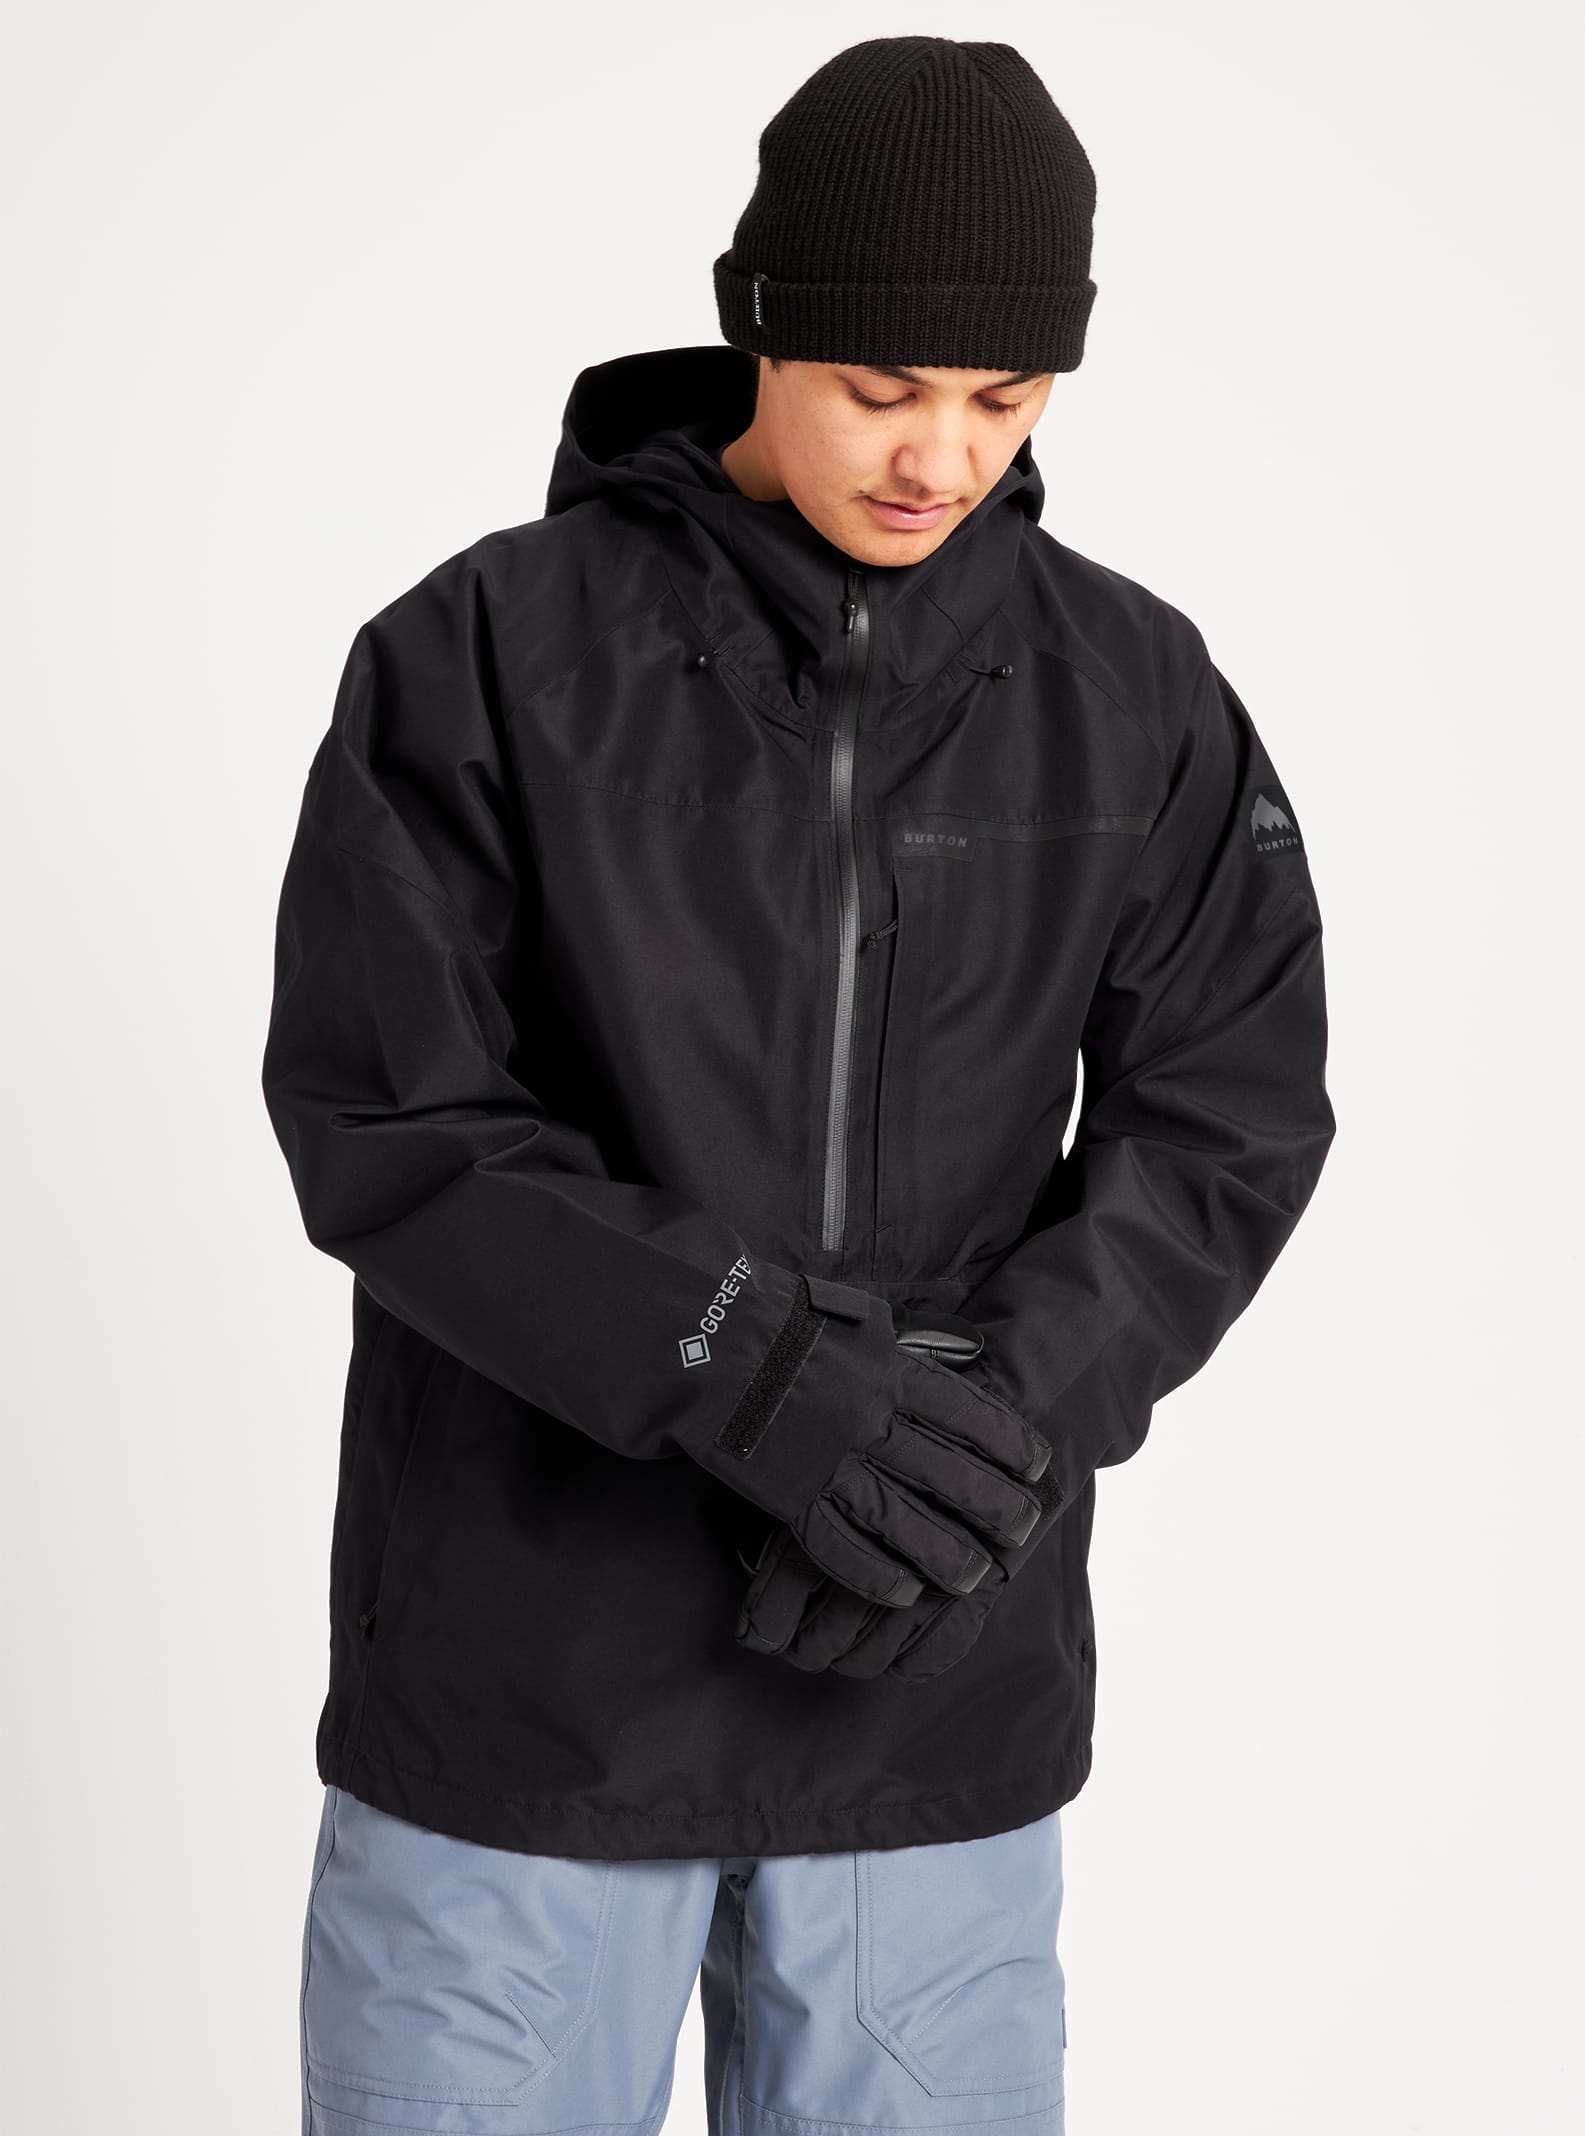 Burton Winter Jackets outlet - Men - 1800 products on sale | FASHIOLA.co.uk